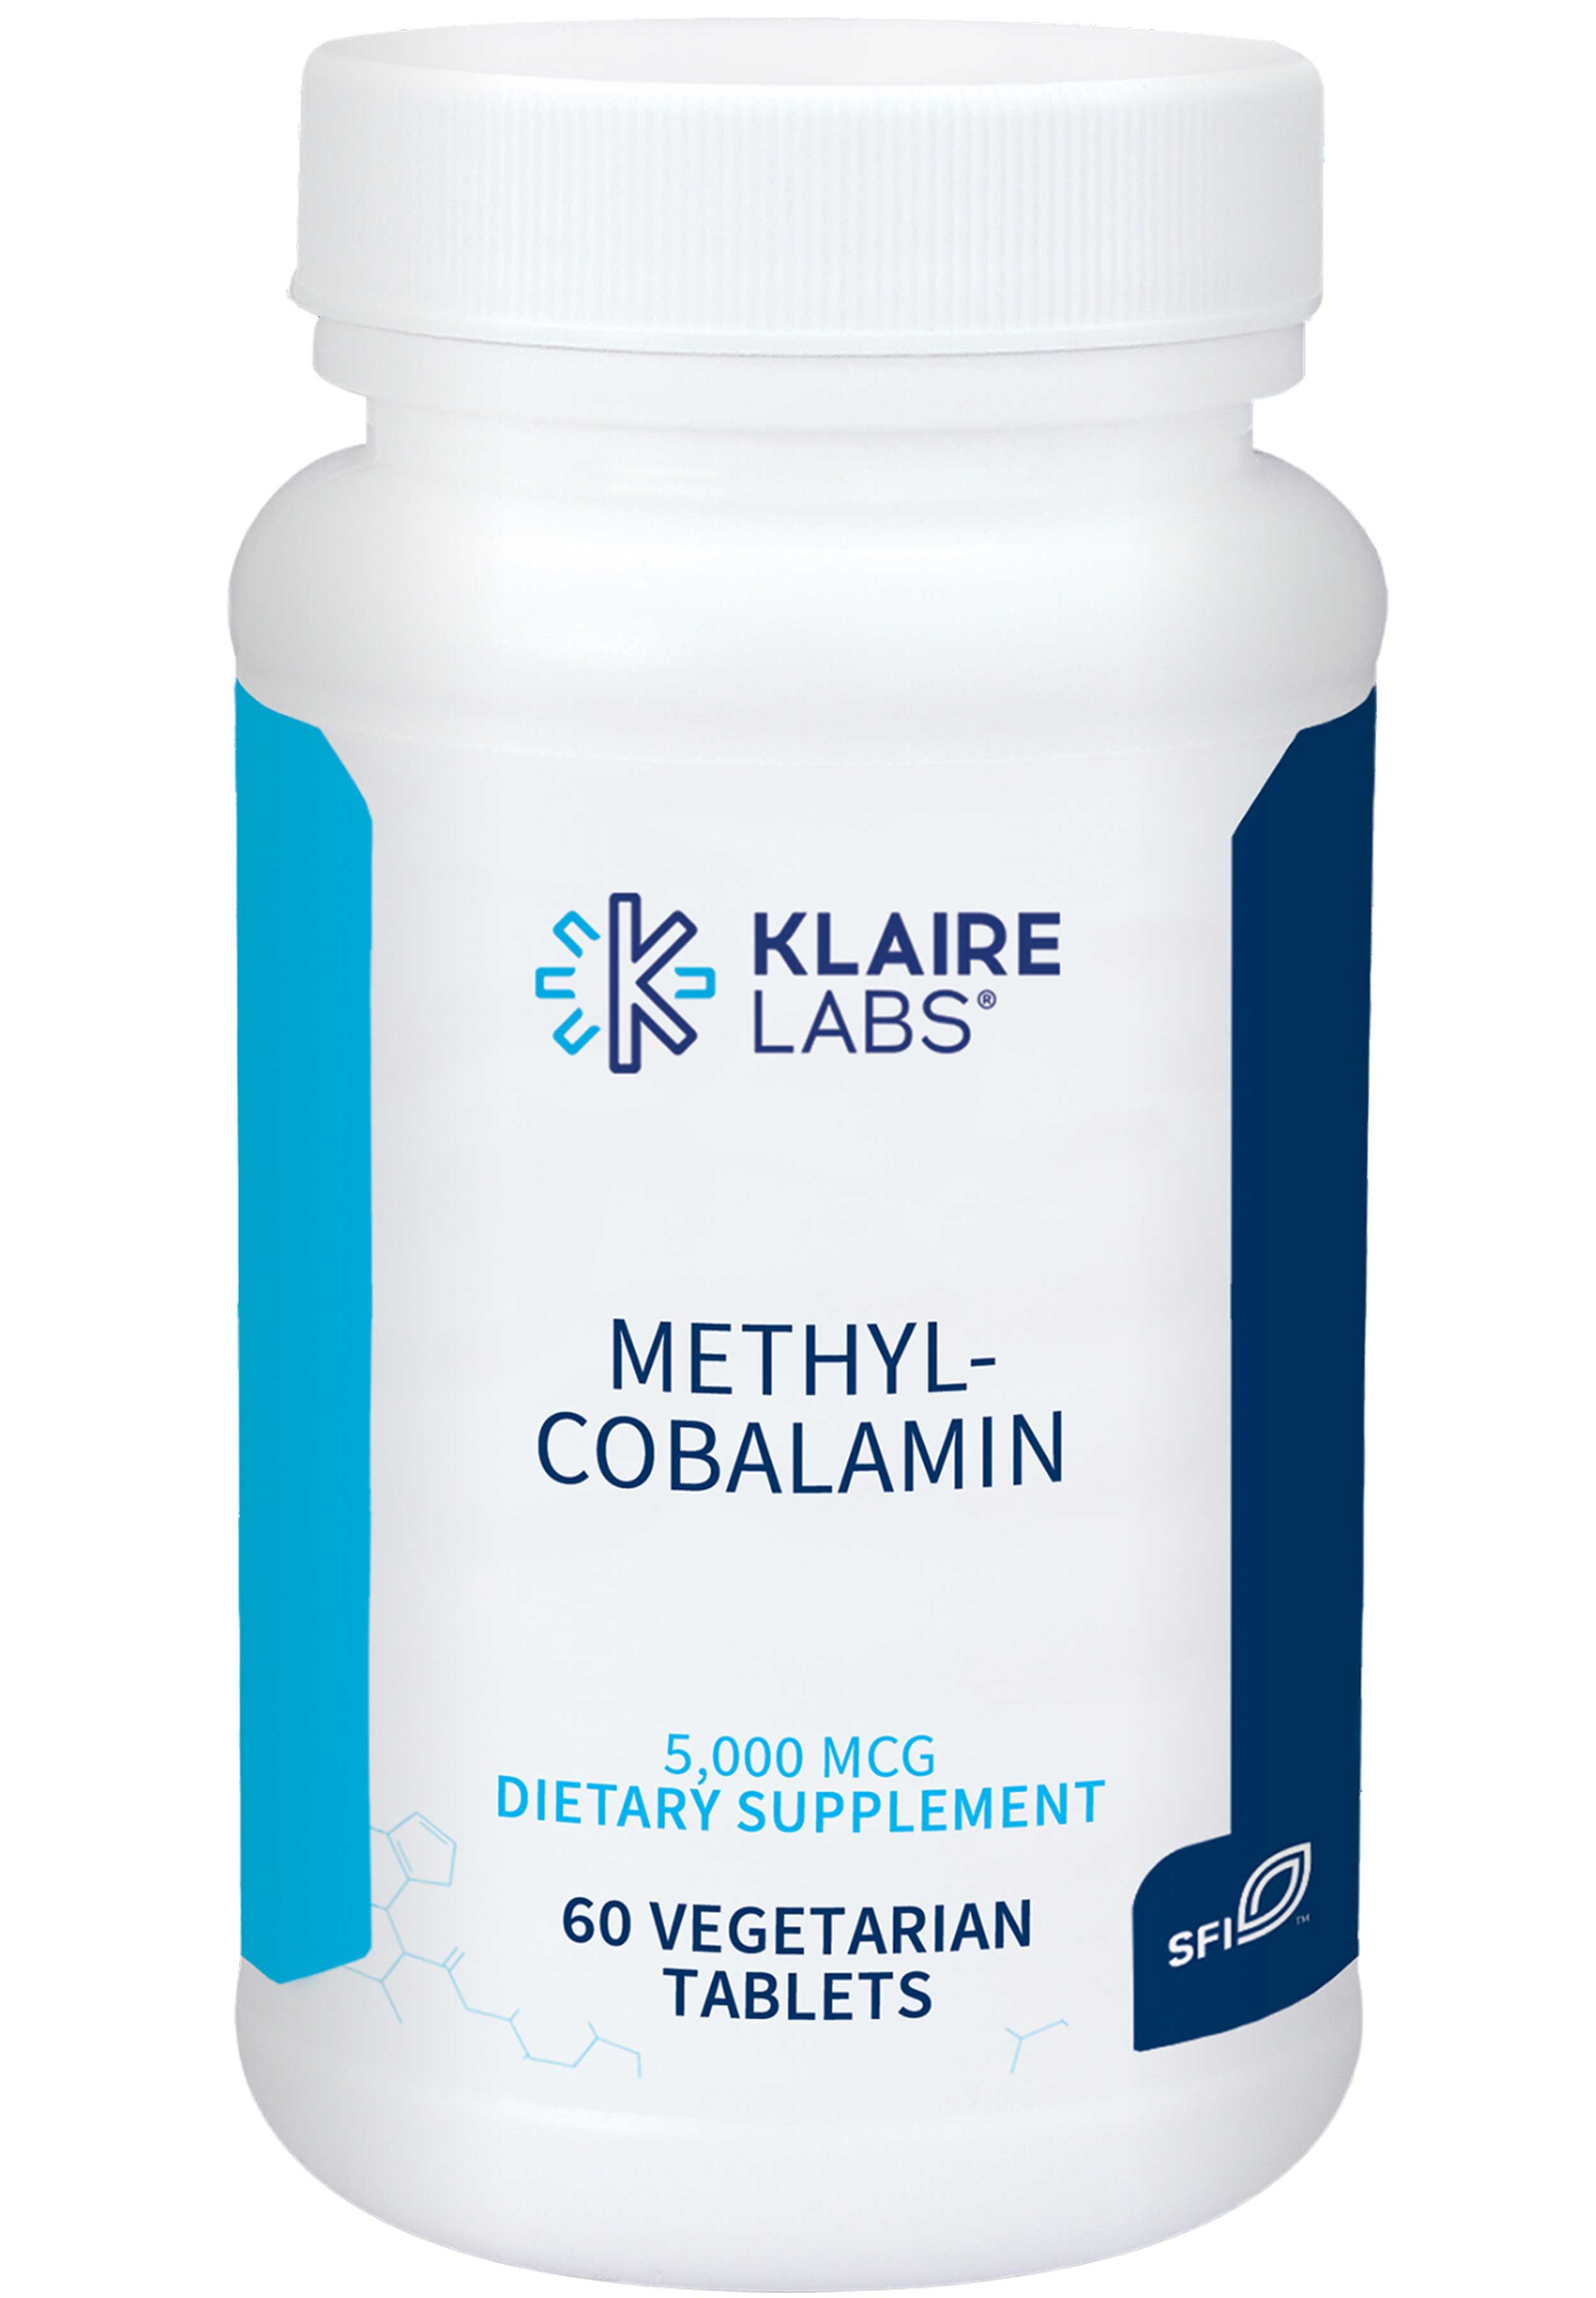 Klaire Labs Methyl-Cobalamin